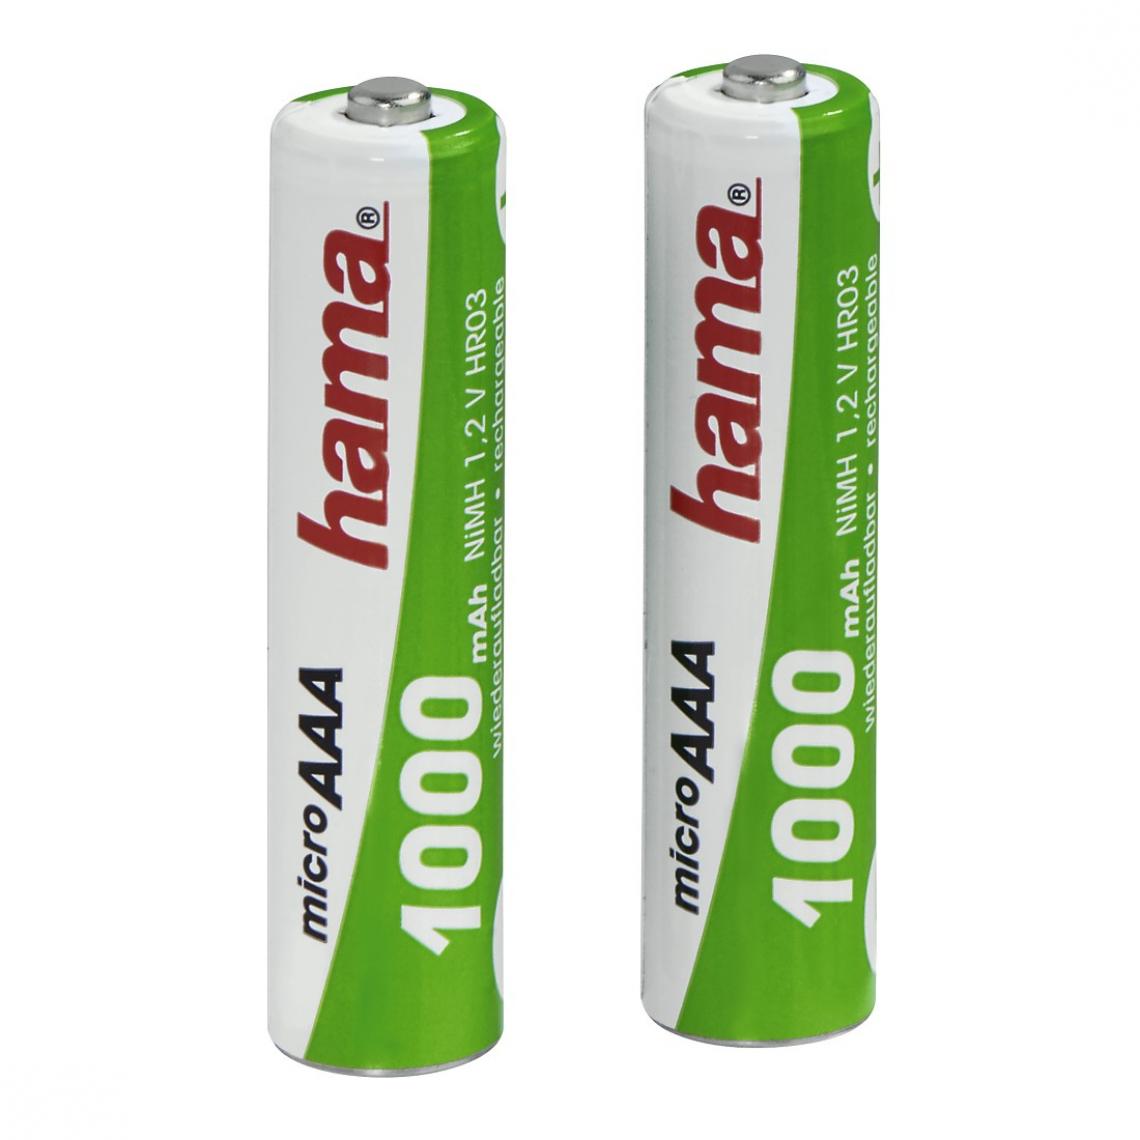 Hama - Batteries NiMH 2x AAA, 1000 mAh, 1,2V - Piles standard